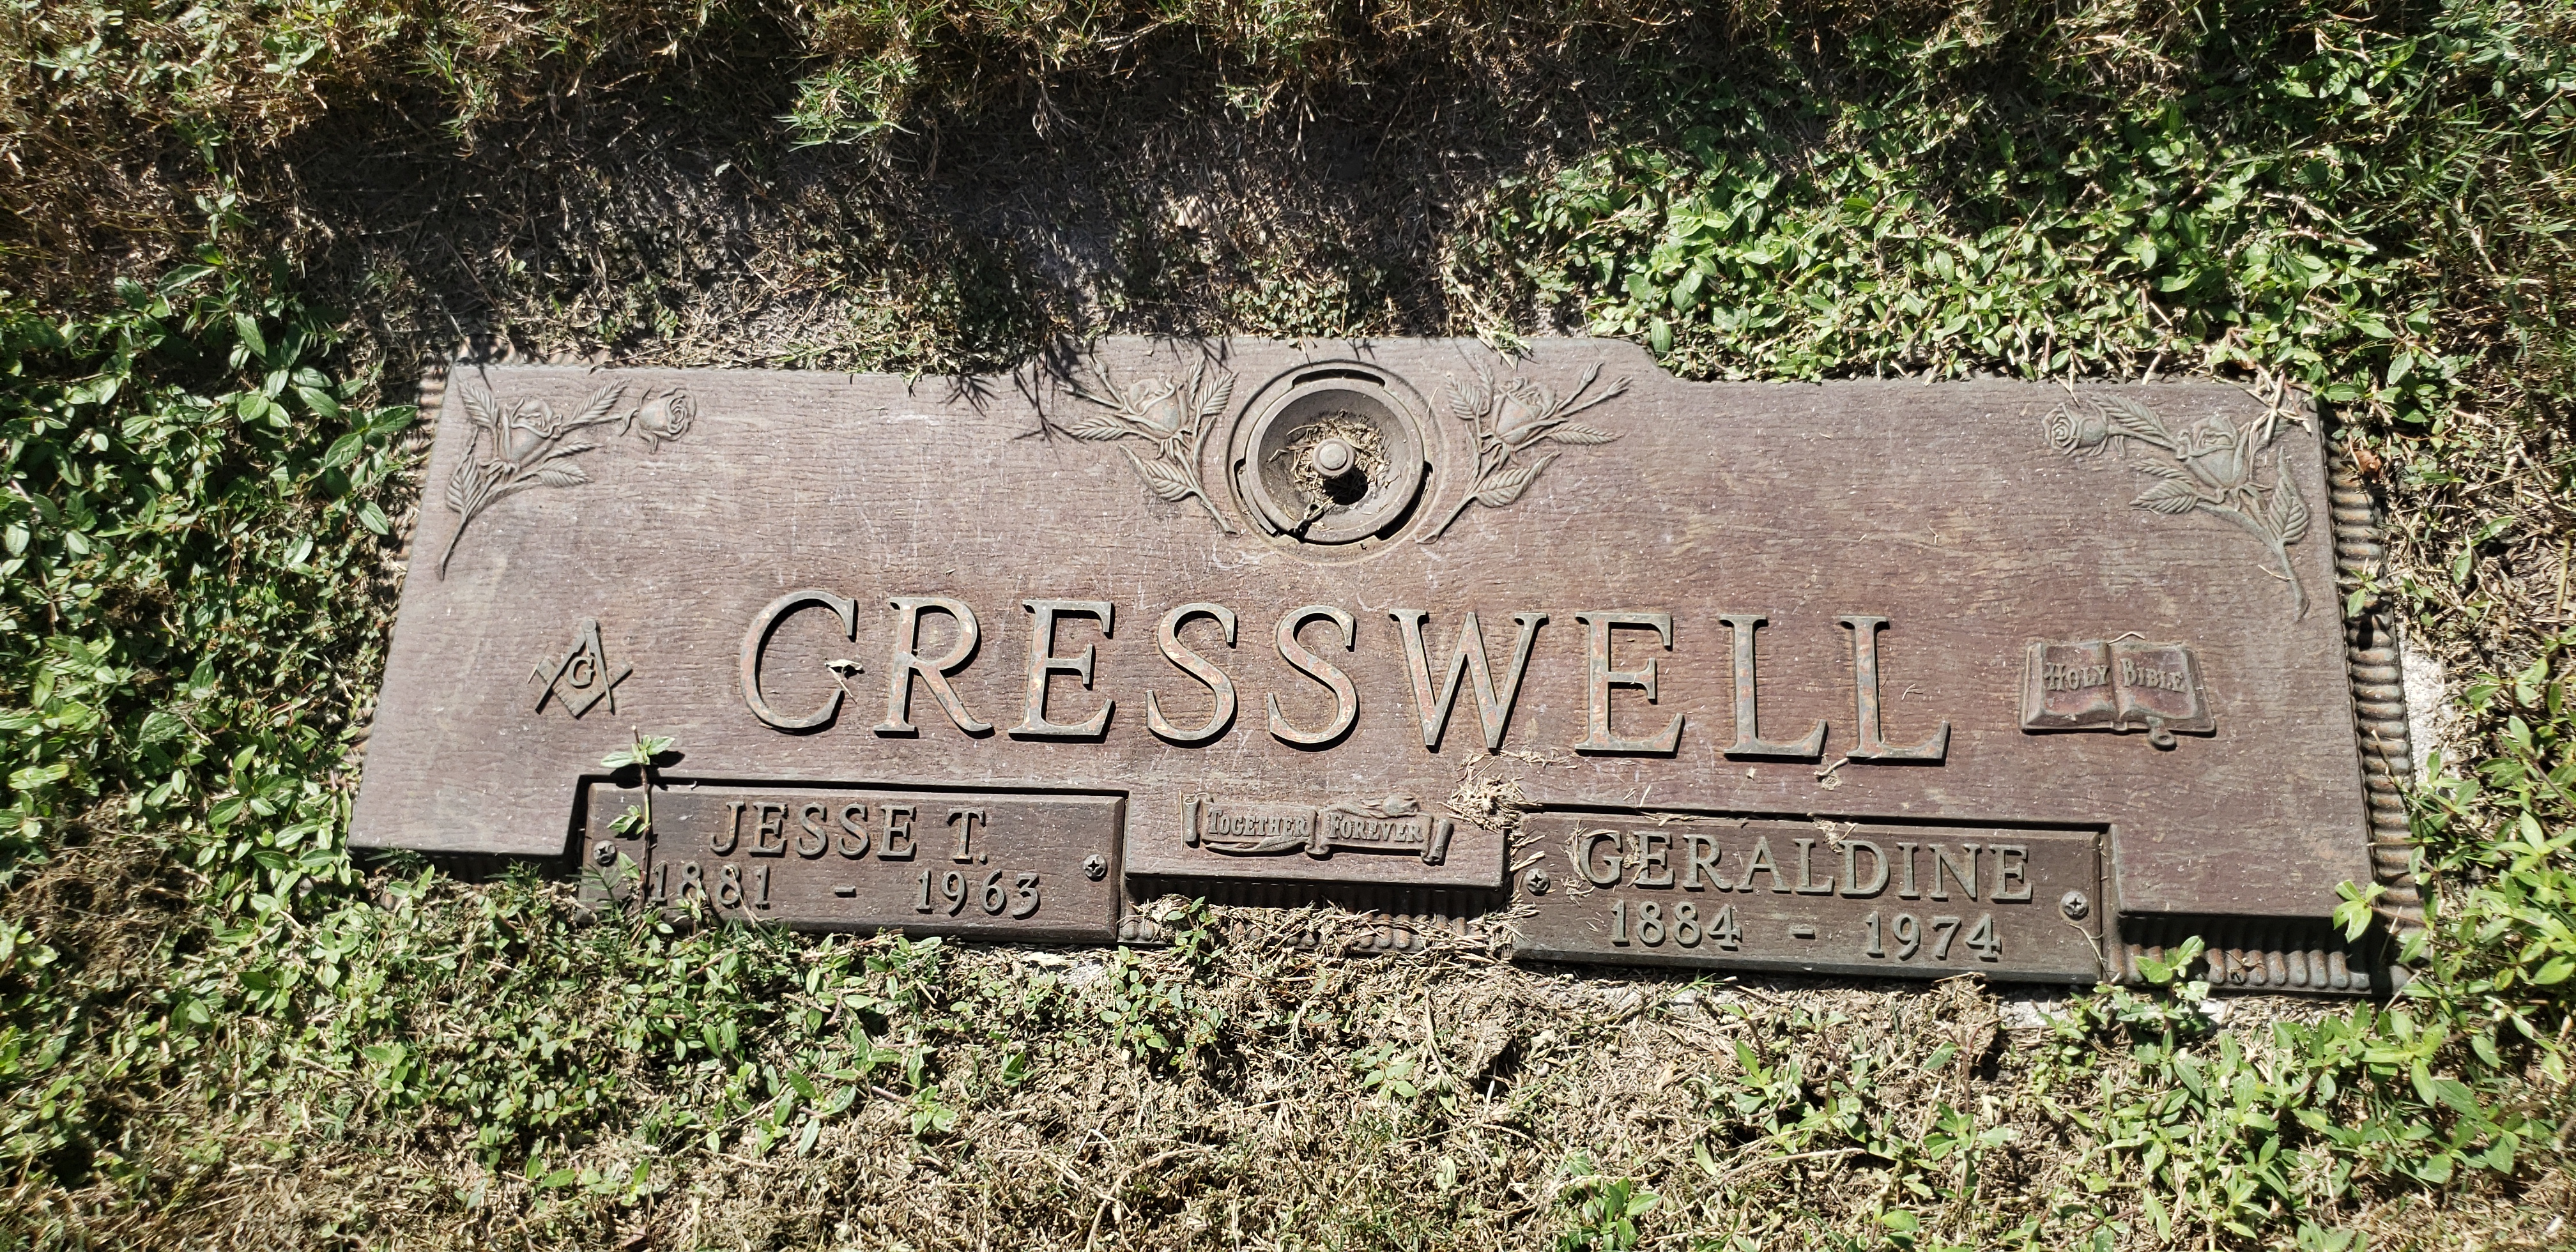 Jesse T Gresswell